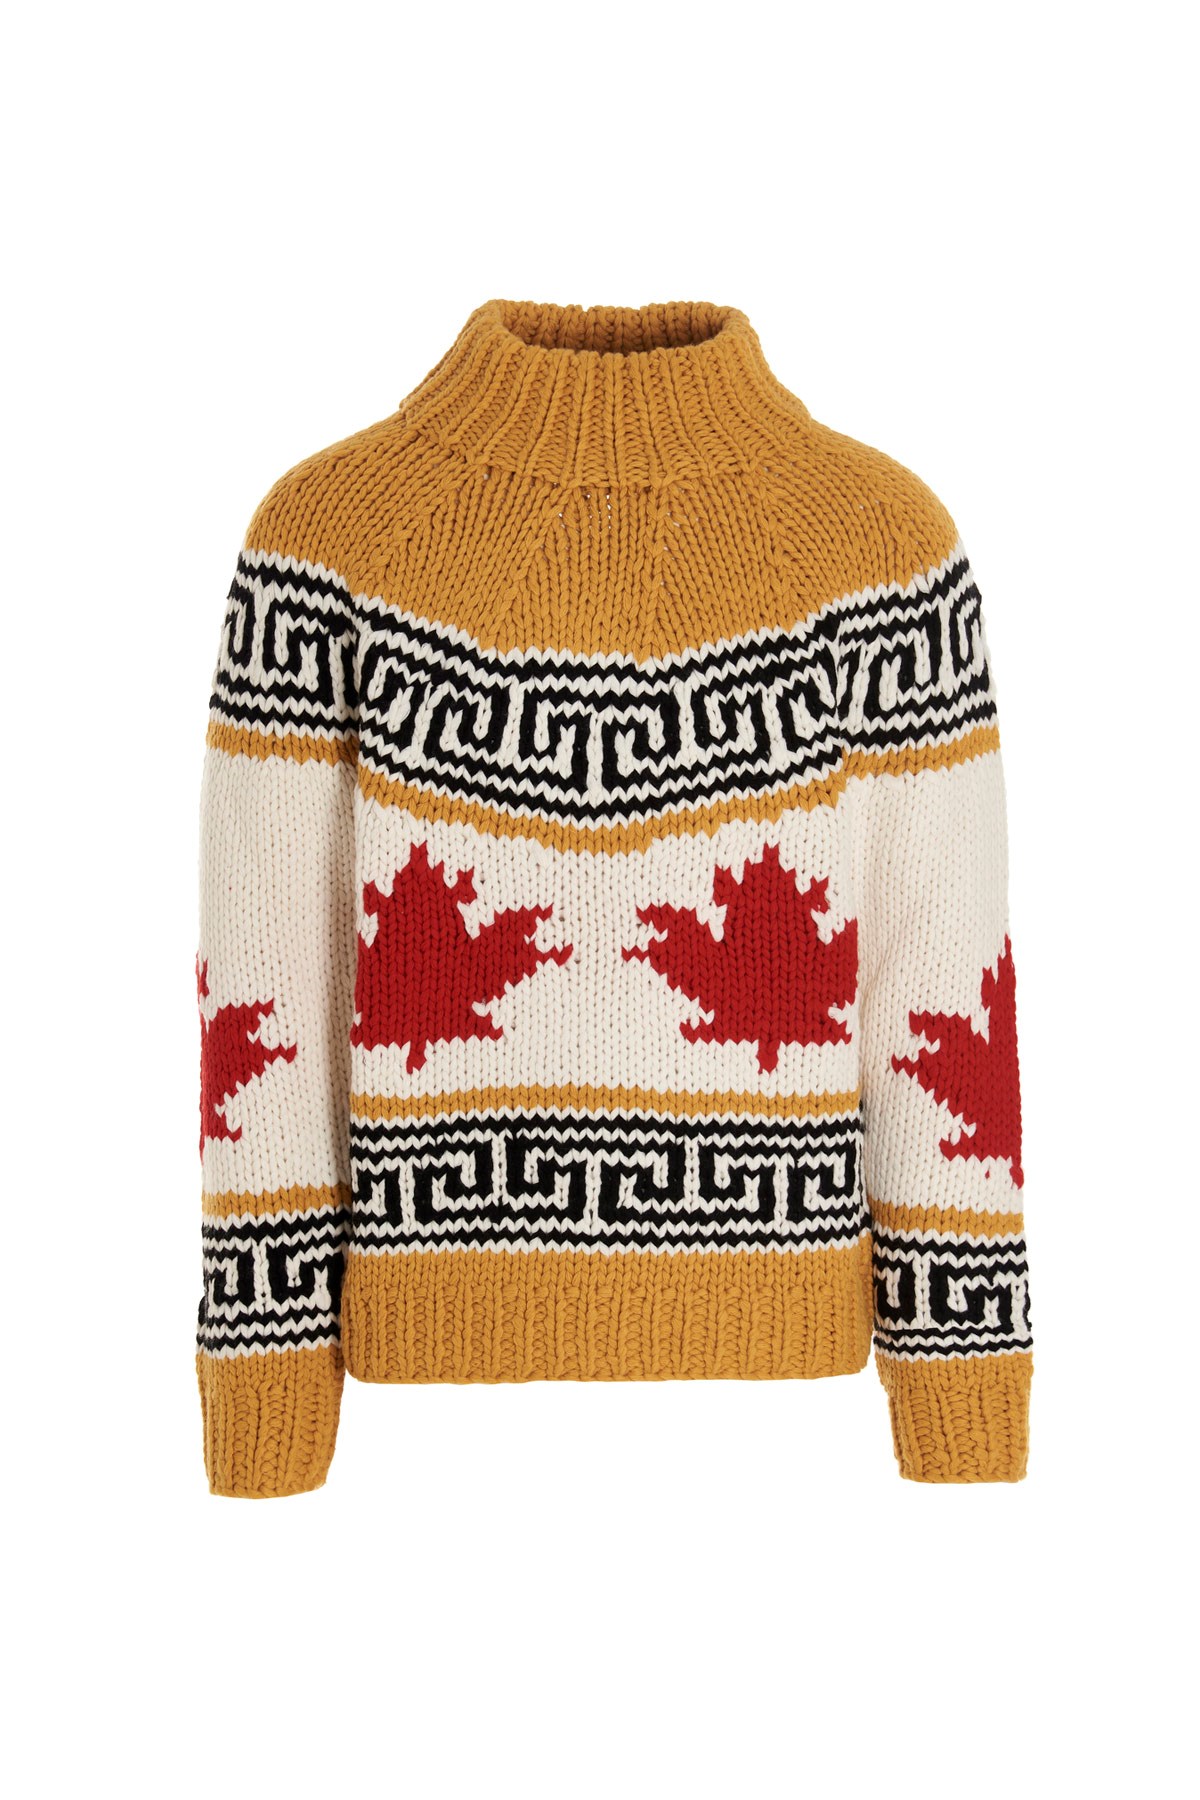 DSQUARED2 'Big Leaf' Sweater